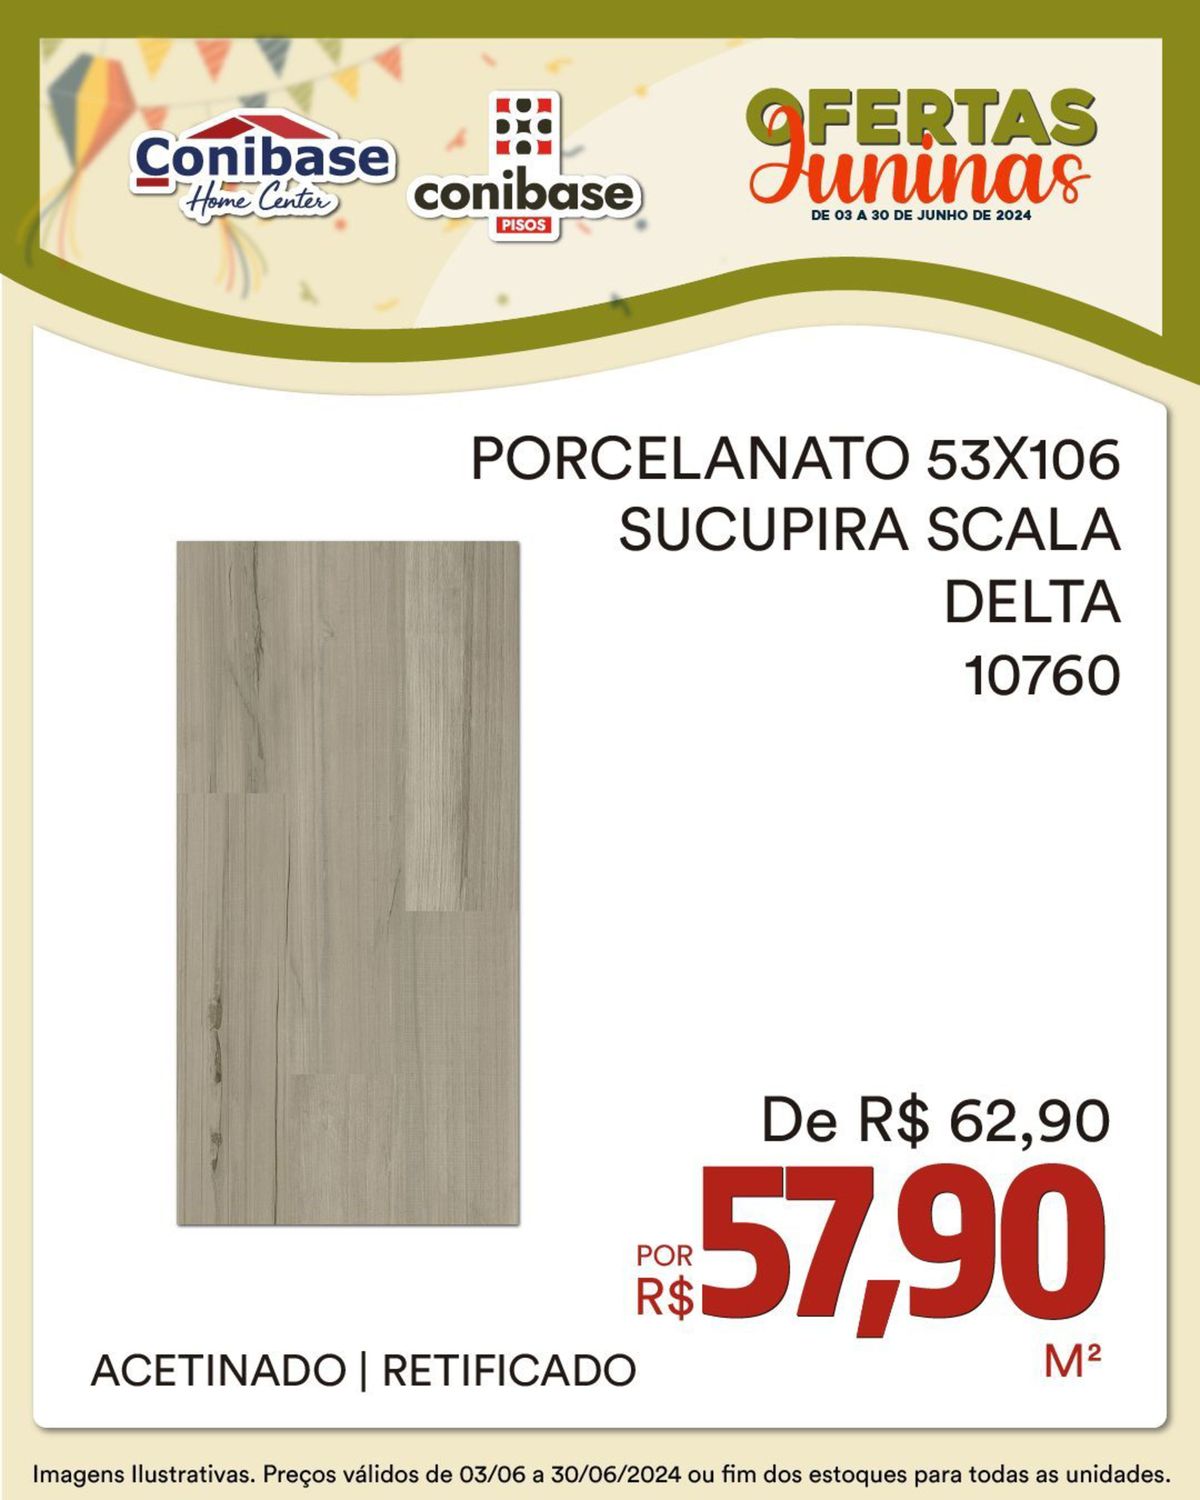 Porcelanato Sucupira Scala Delta 53x106 cm - de R$62,90 por R$51,90